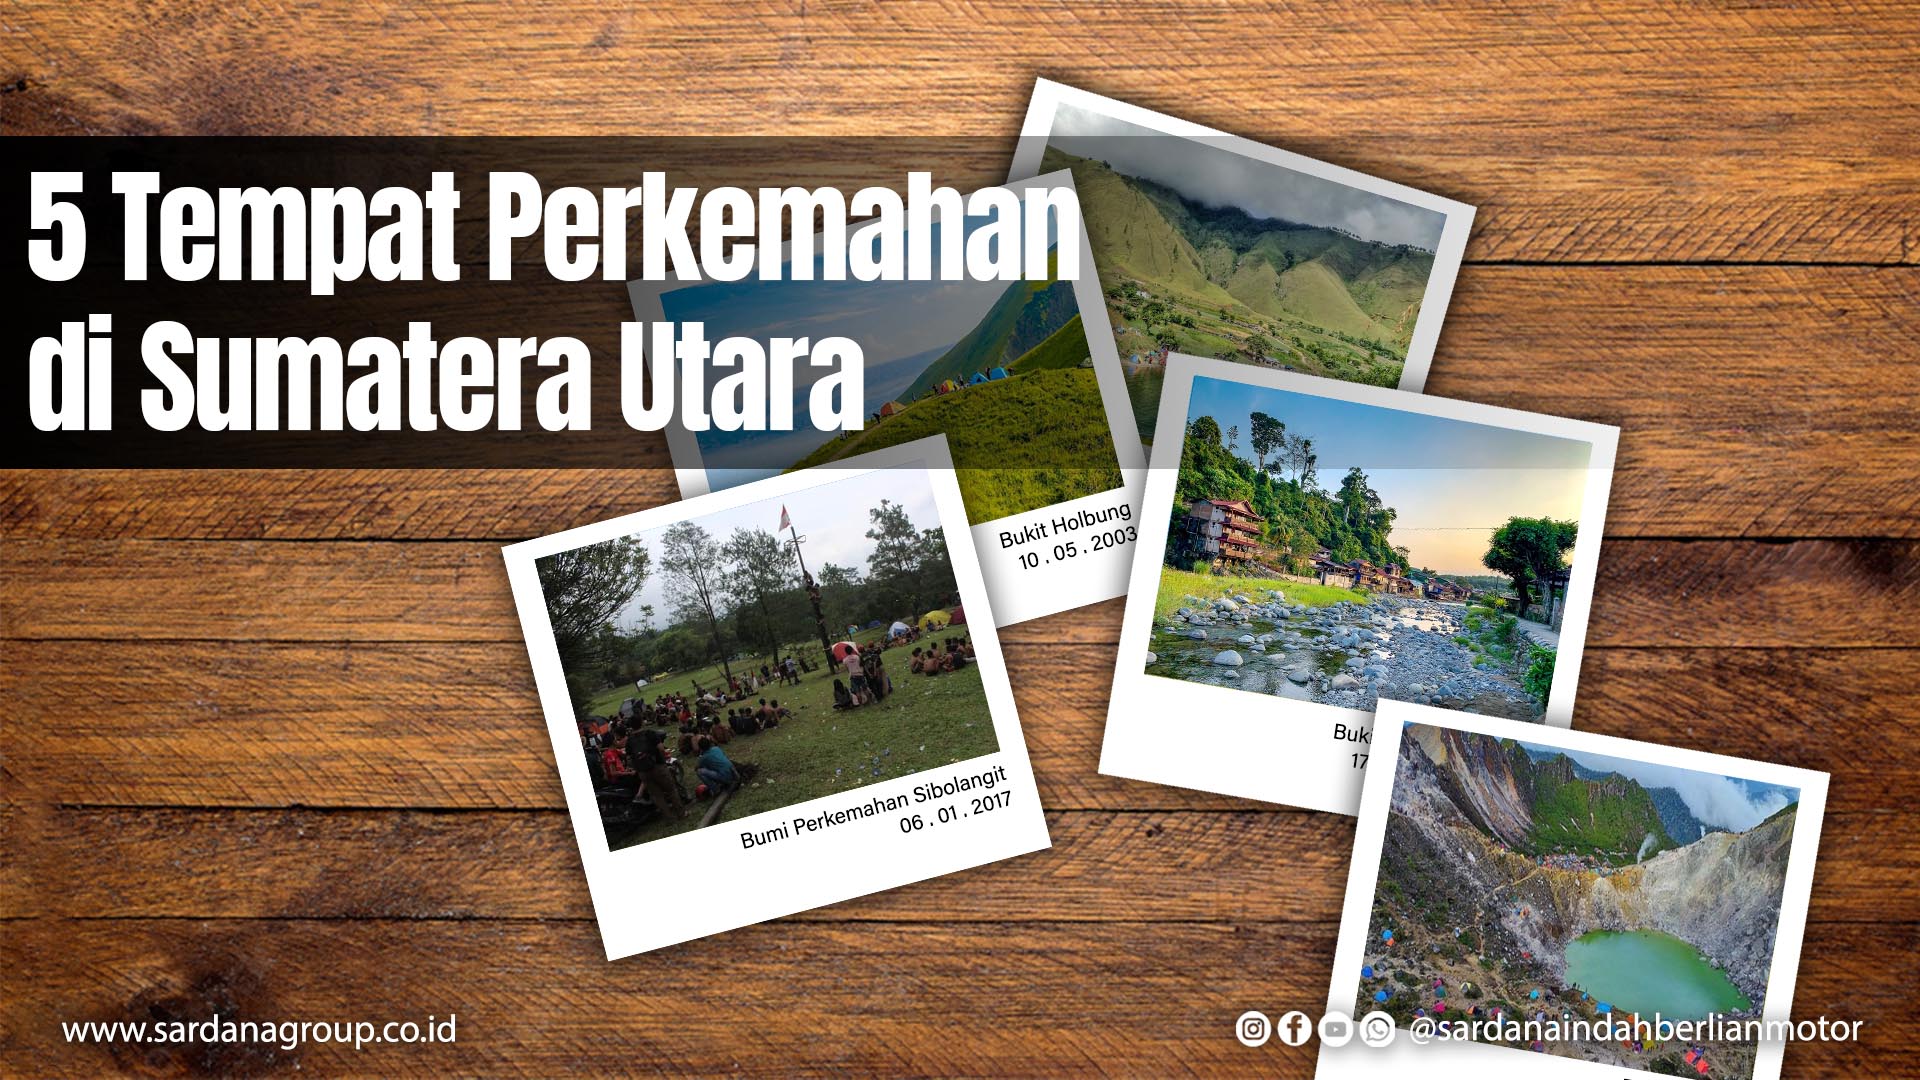 Lima Tempat Perkemahan di Sumatera Utara Yang Jadi Rekomendasi 